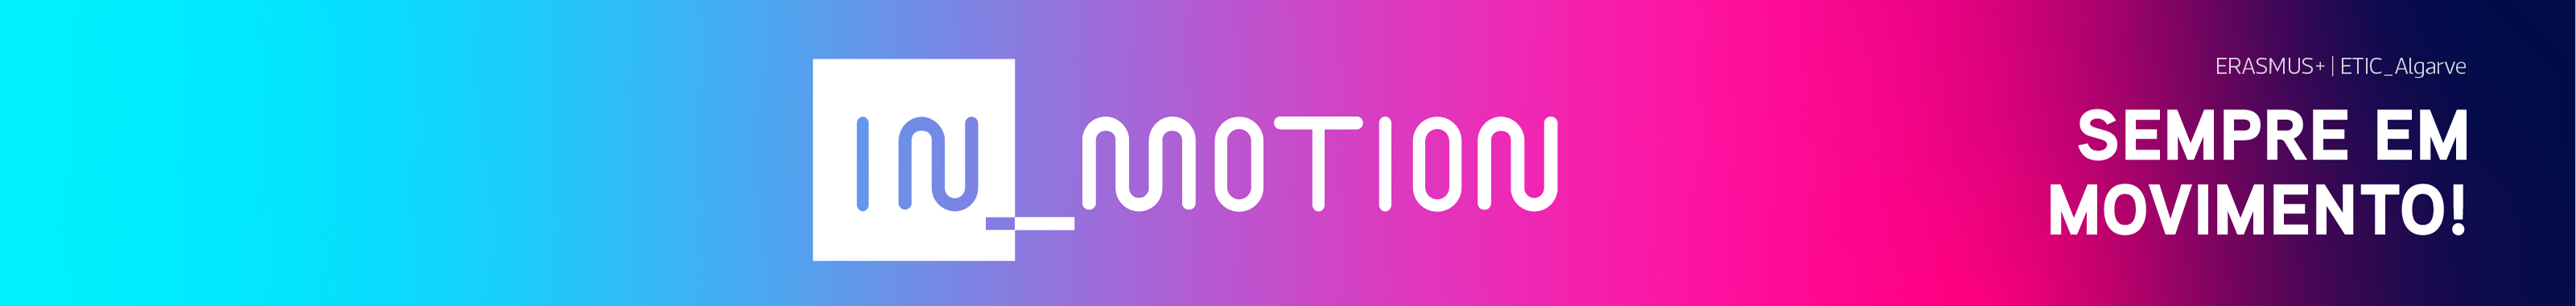 Profil-Banner von ETIC_Algarve In_Motion